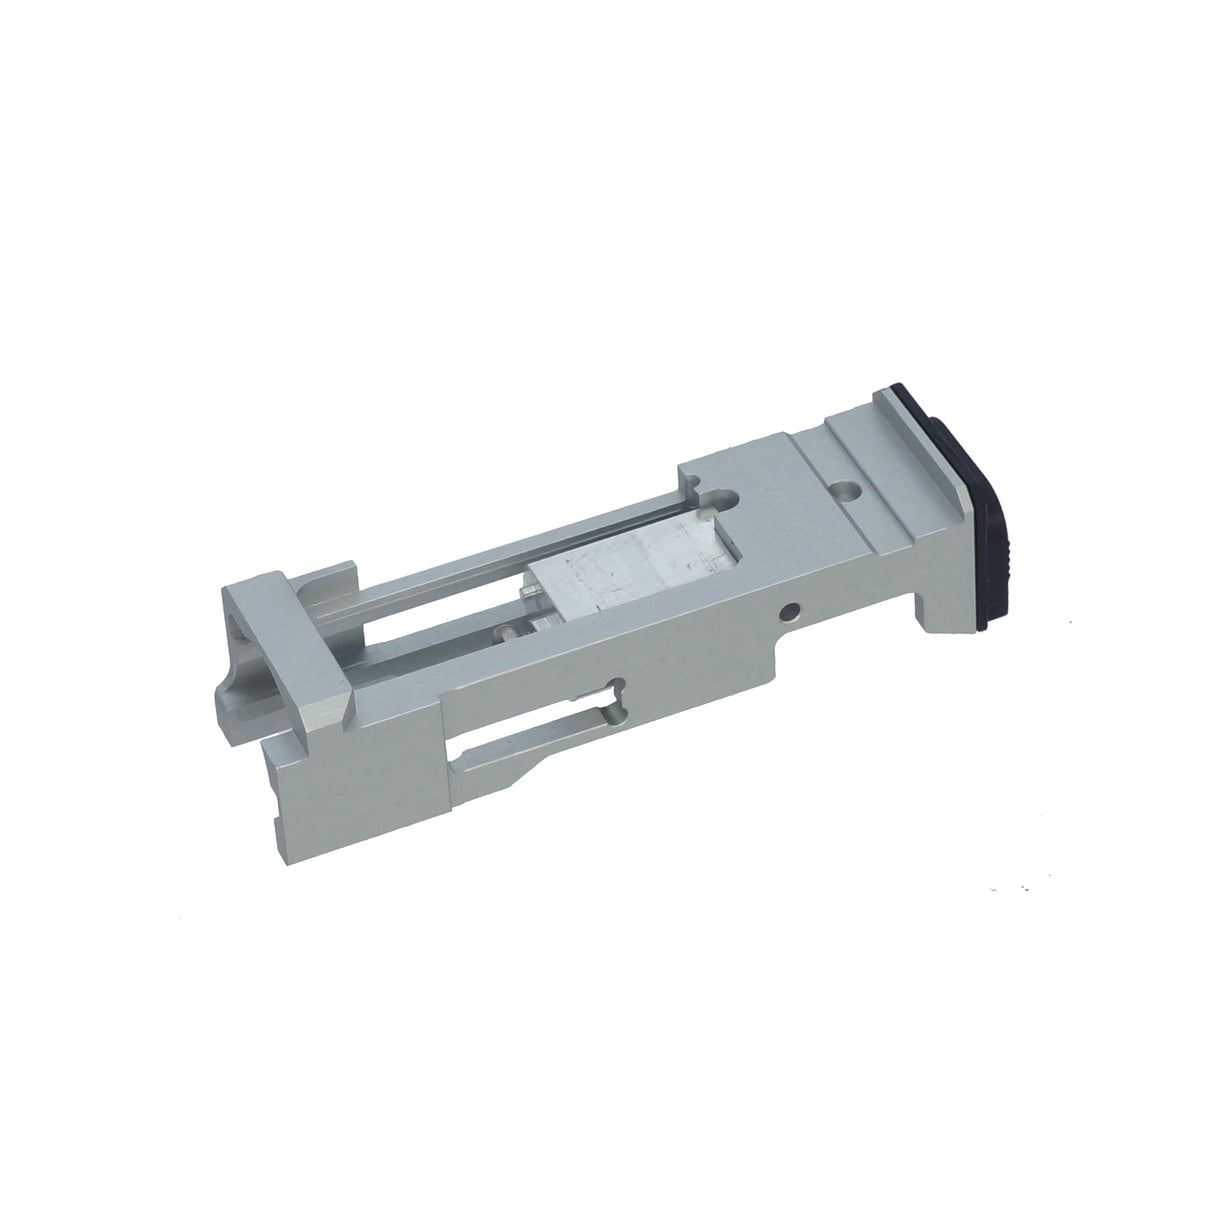 Guns Modify CNC Aluminum Zero Blowback Housing for RMR Cut Marui G17 GBB ( GM0162 )